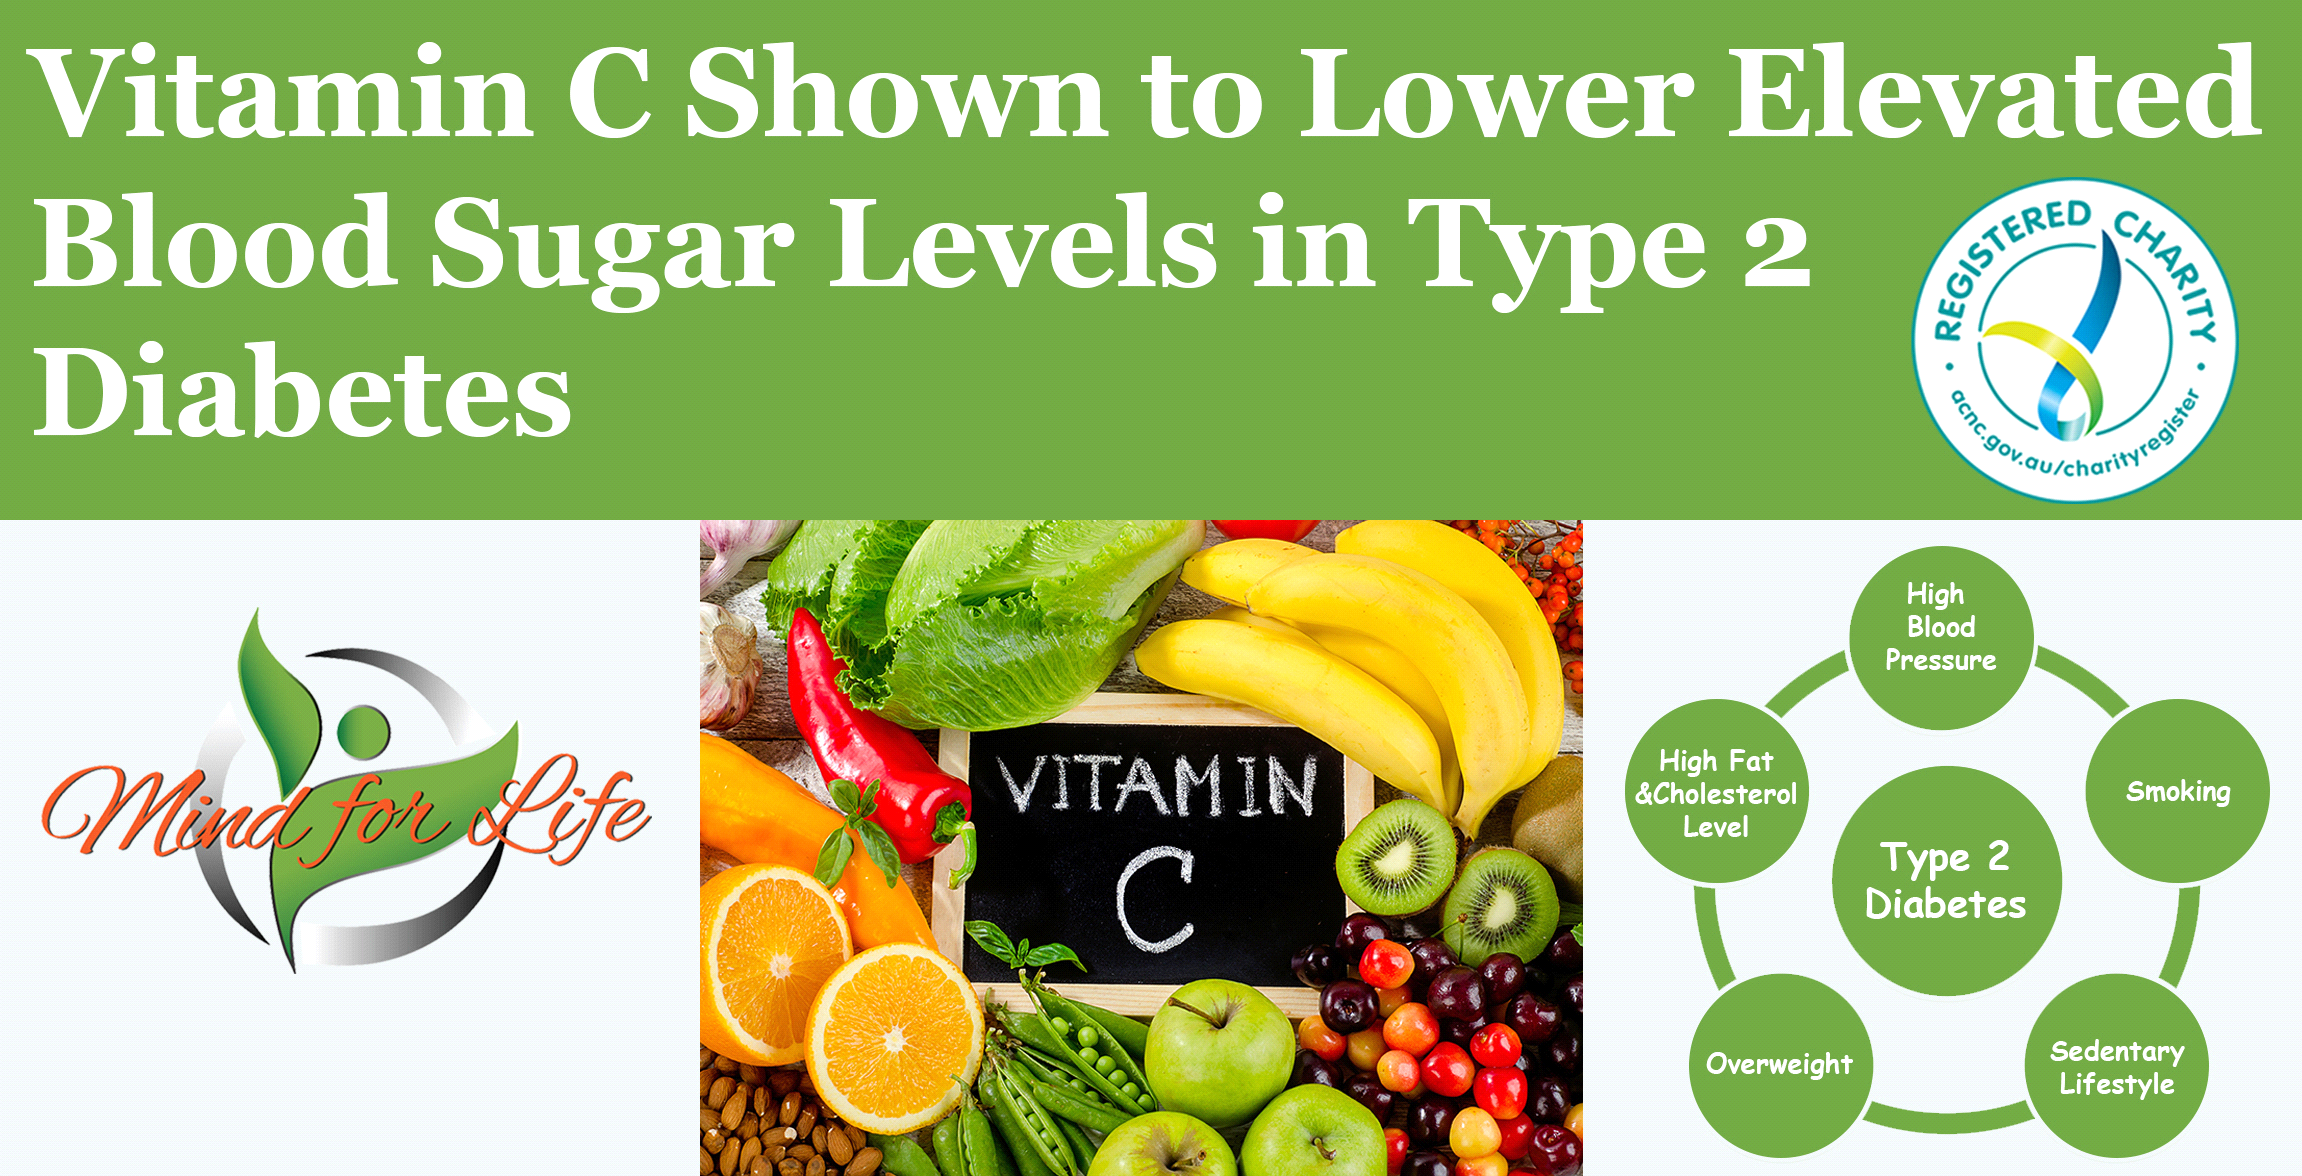 Vitamin C lowers sugar blood levels